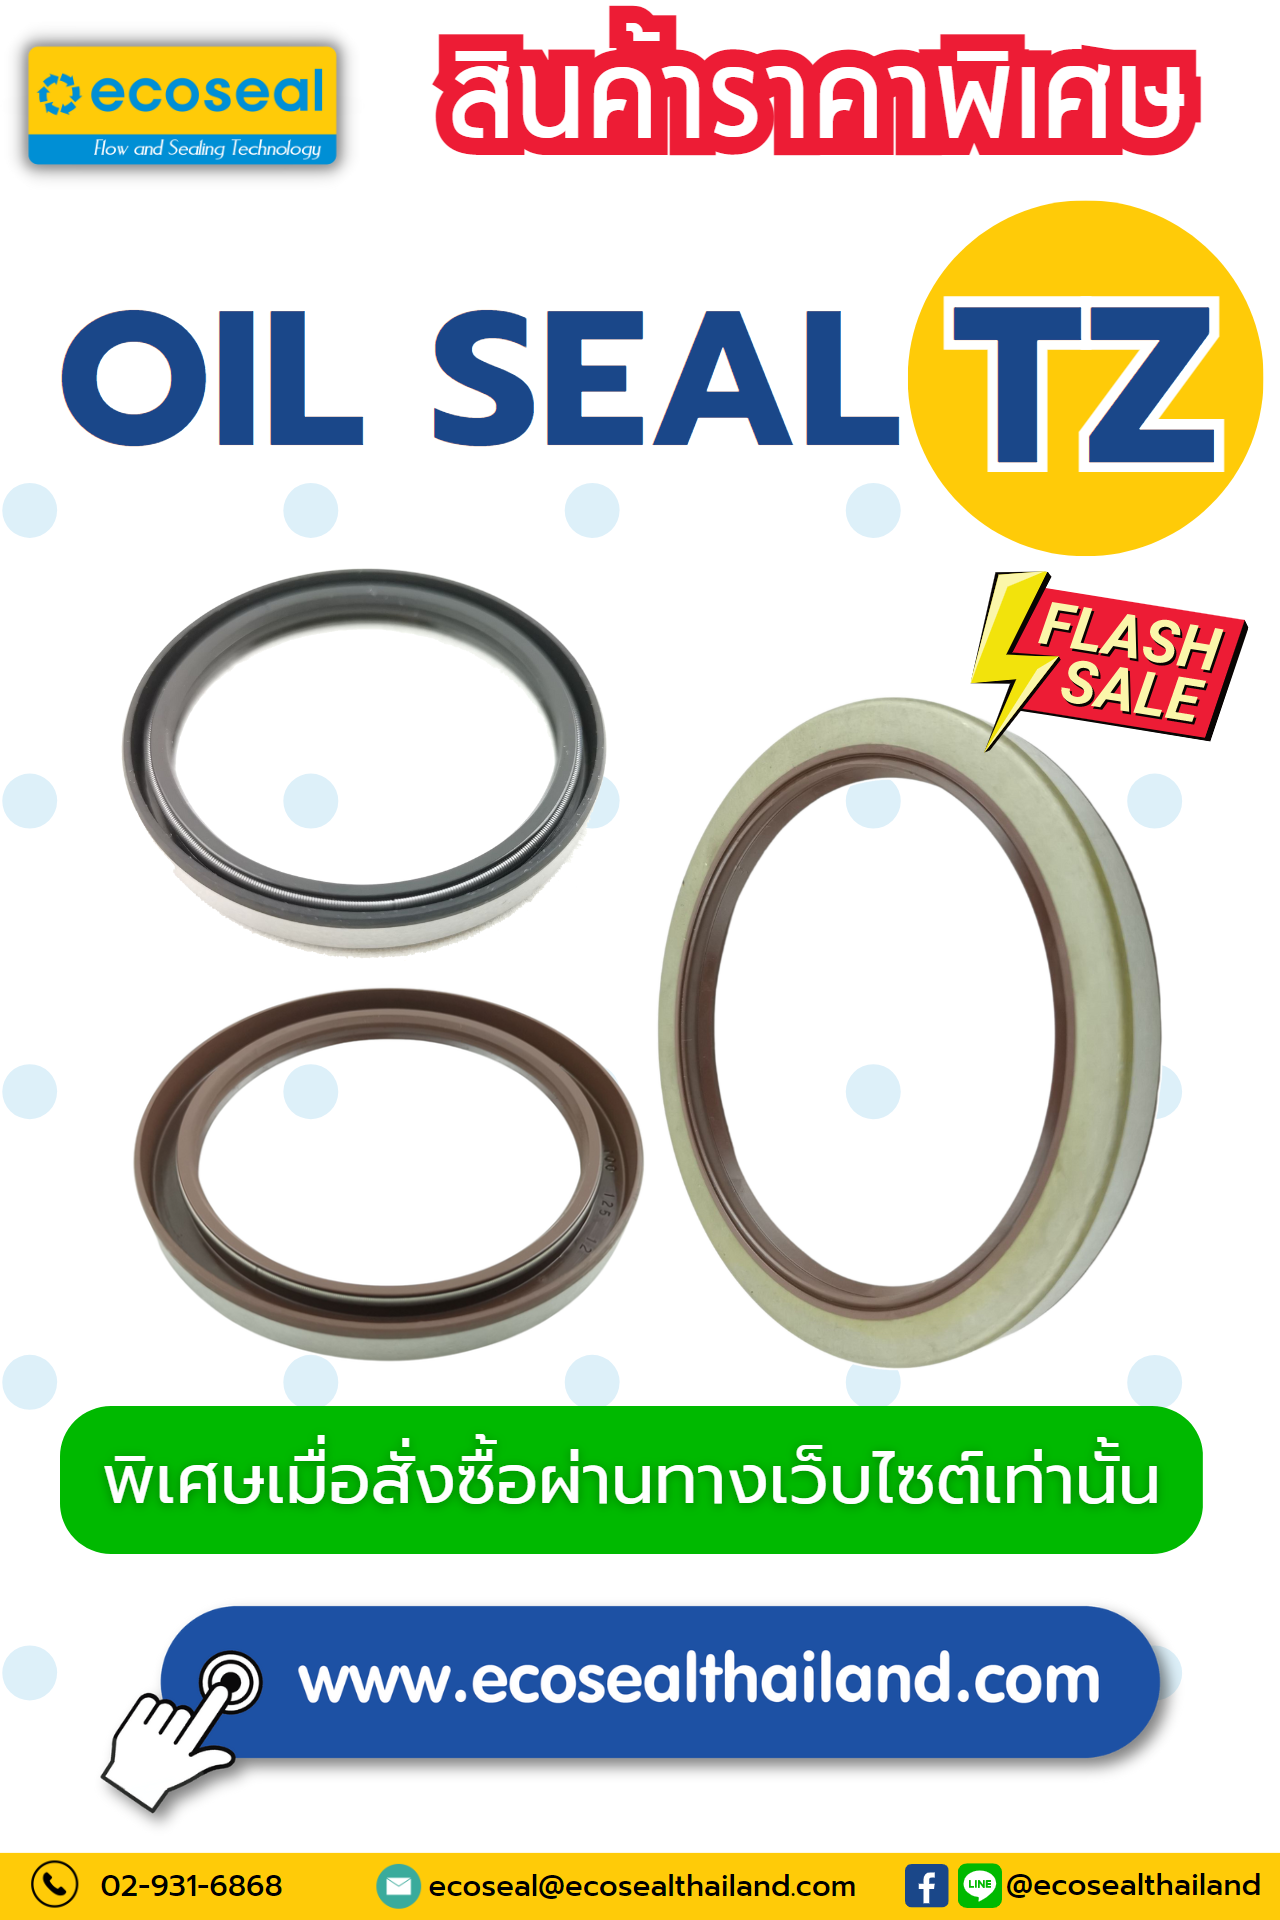 Promotion Oil Seal TZ โปรโมชั่นพิเศษ